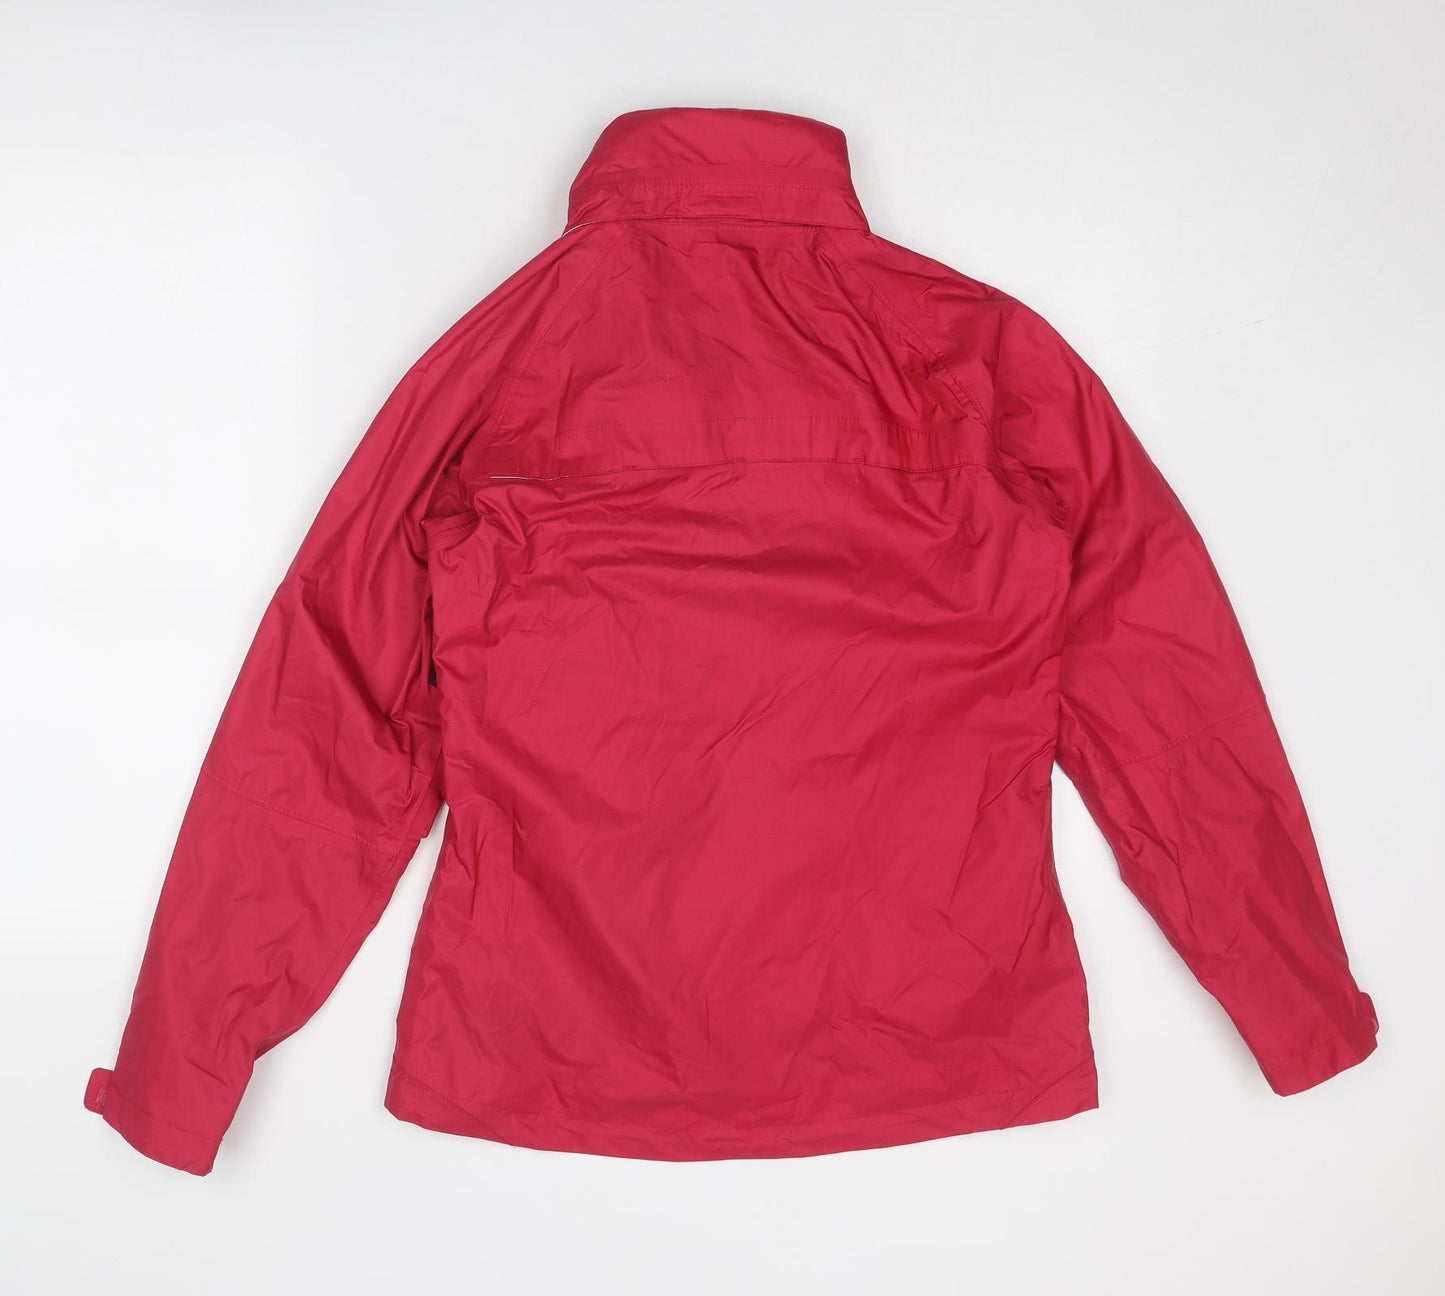 Quechua Womens Pink Jacket Size XS Zip